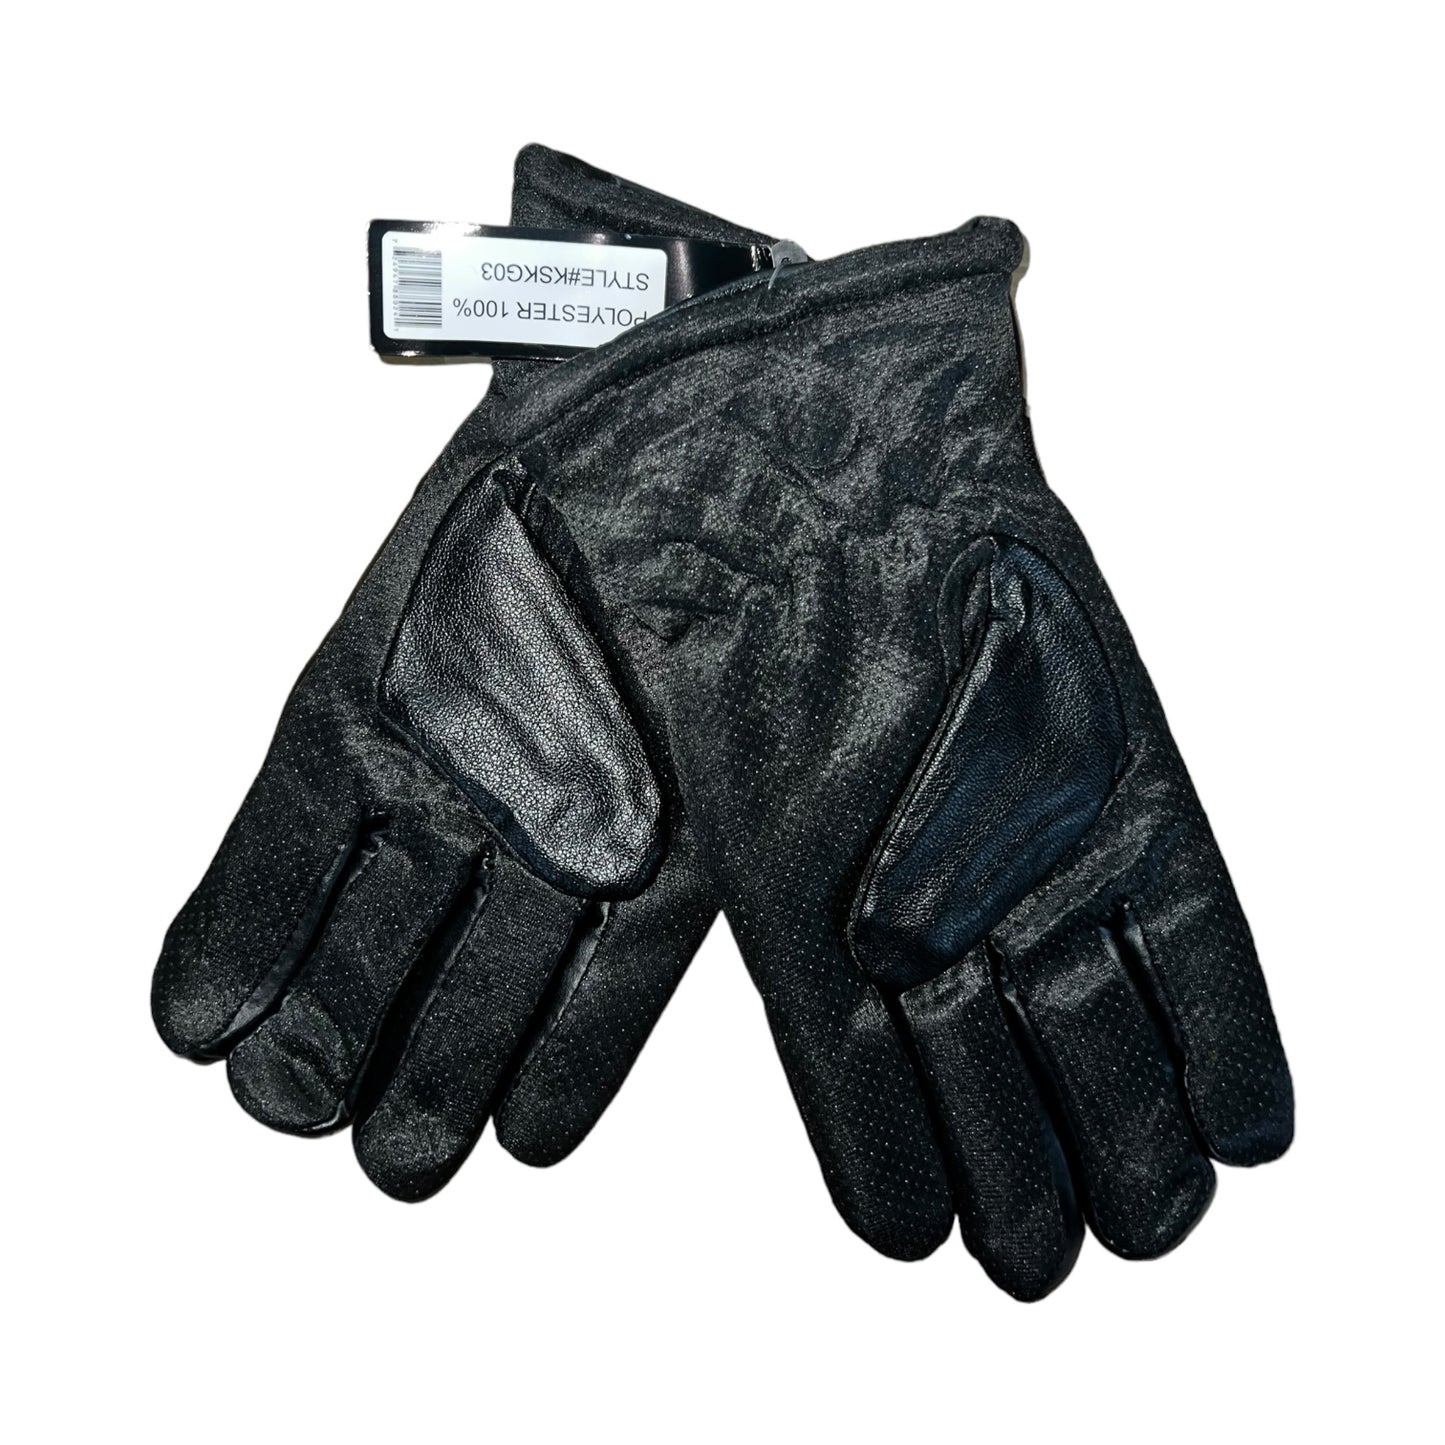 Vantage Fur-Lined Winter Gloves 12-Pairs